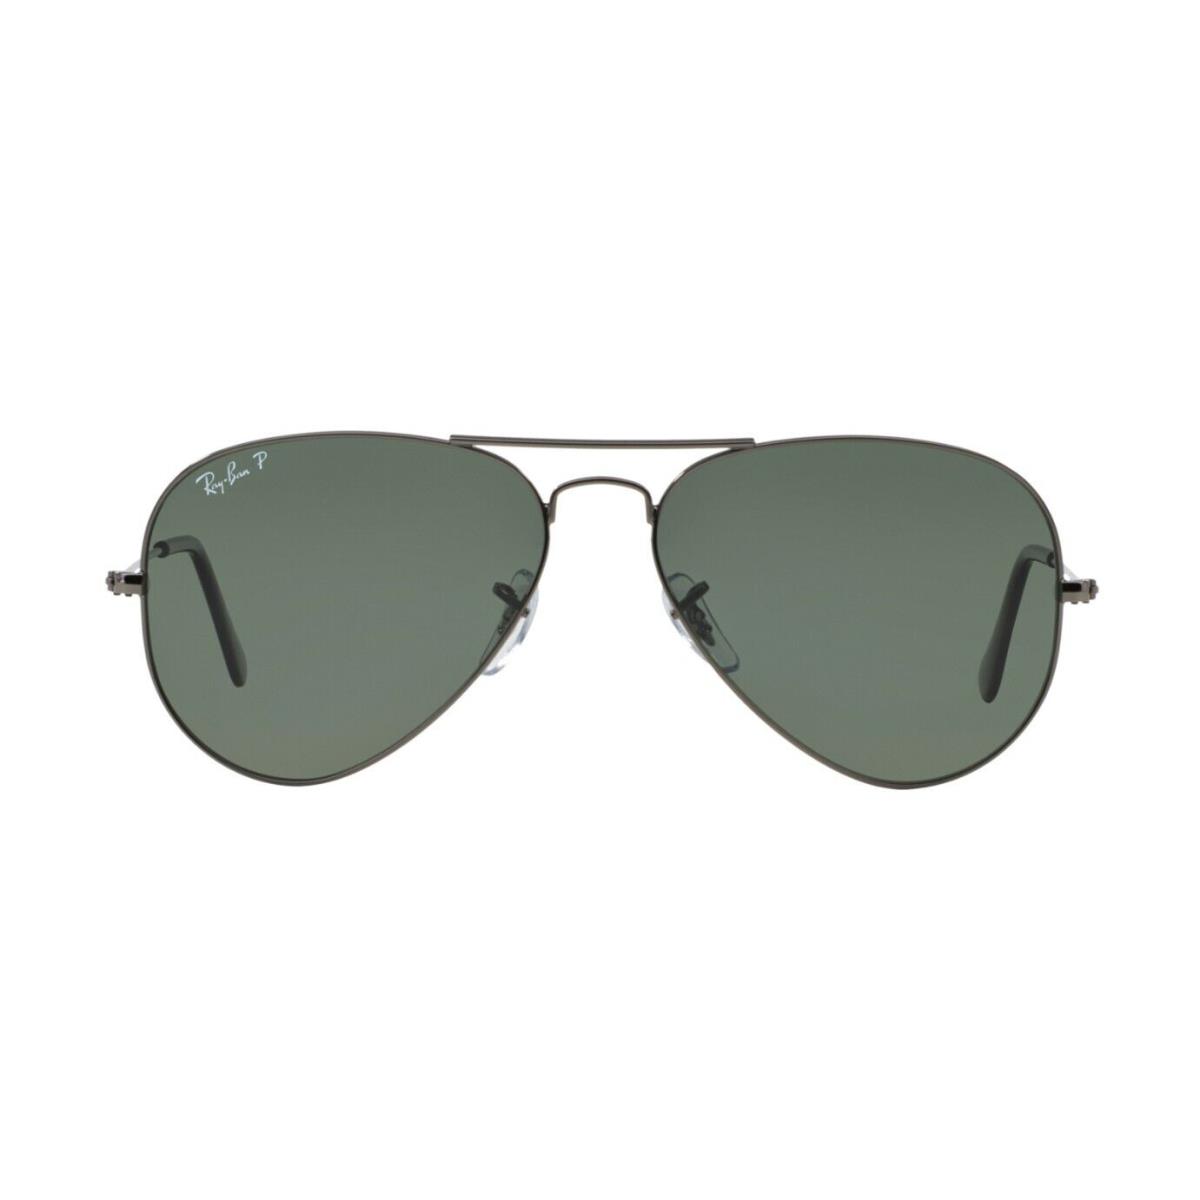 Ray-ban Aviator Large Metal RB 3025 Ruthenium/G15 Classic Green Polor Sunglasses